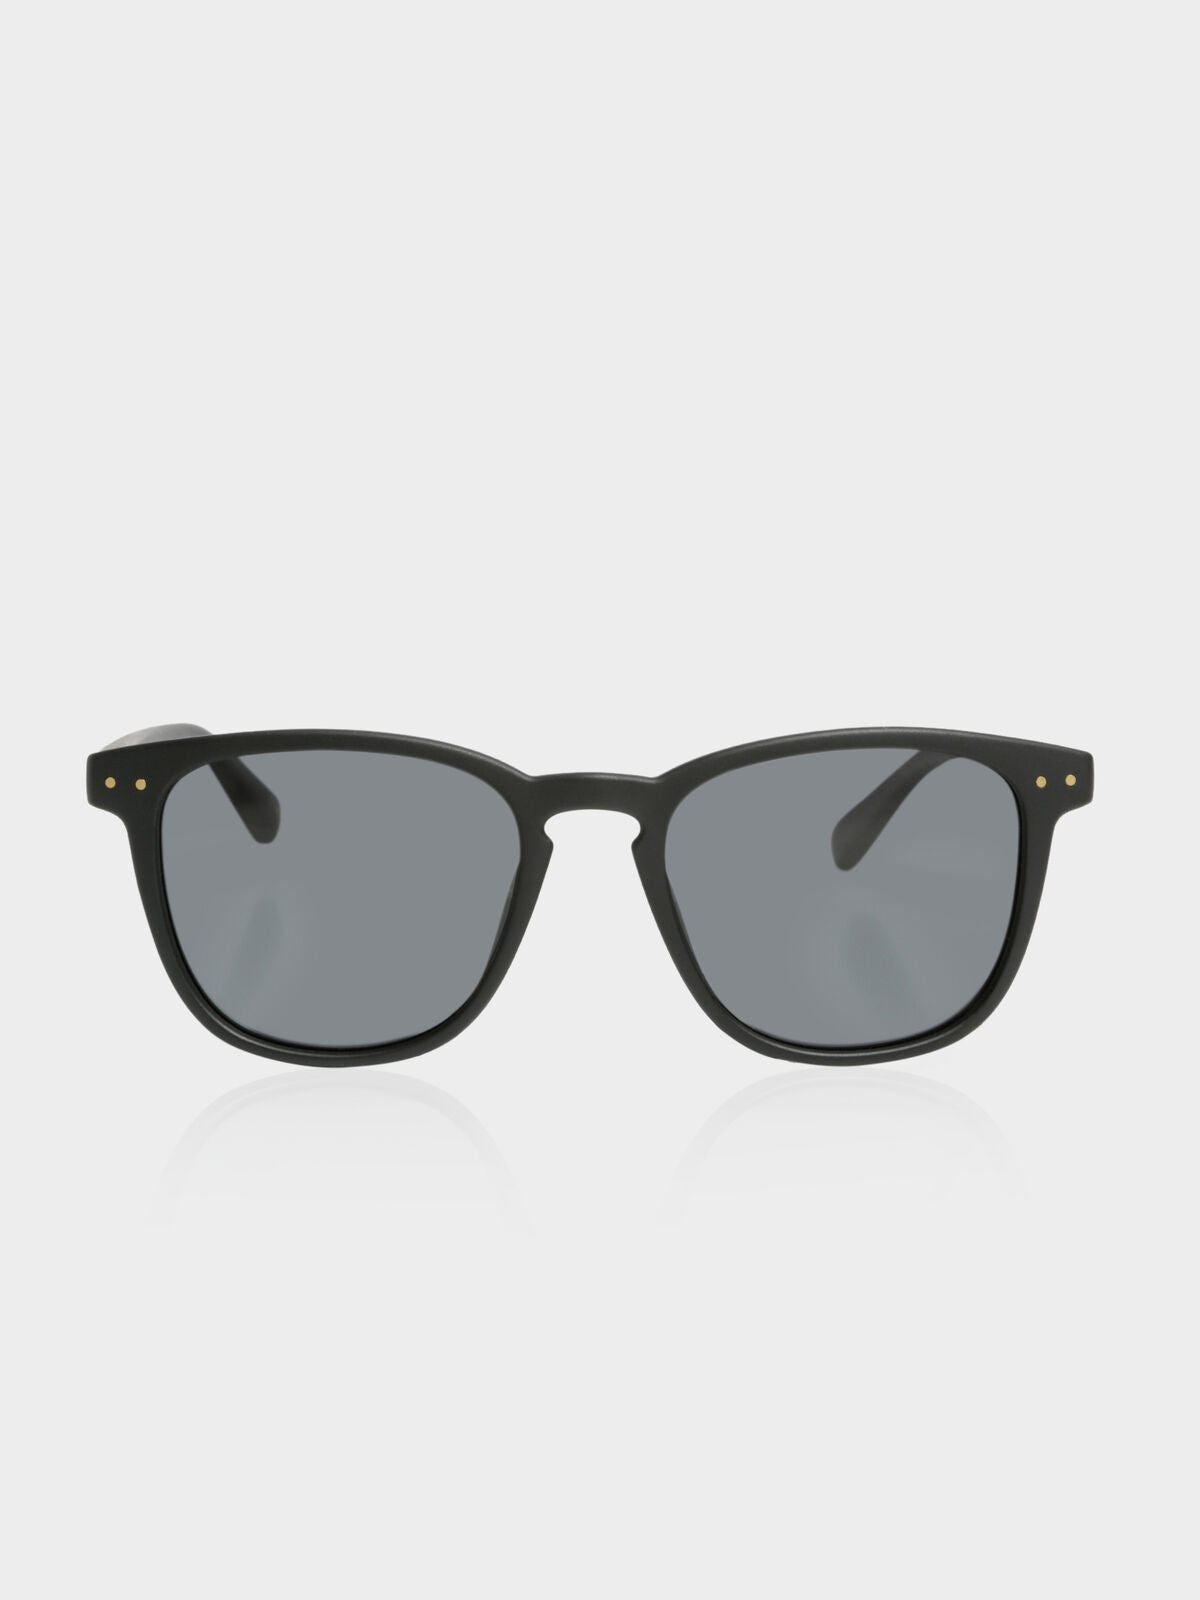 City BKM1 Polarised Sunglasses in Matte Black